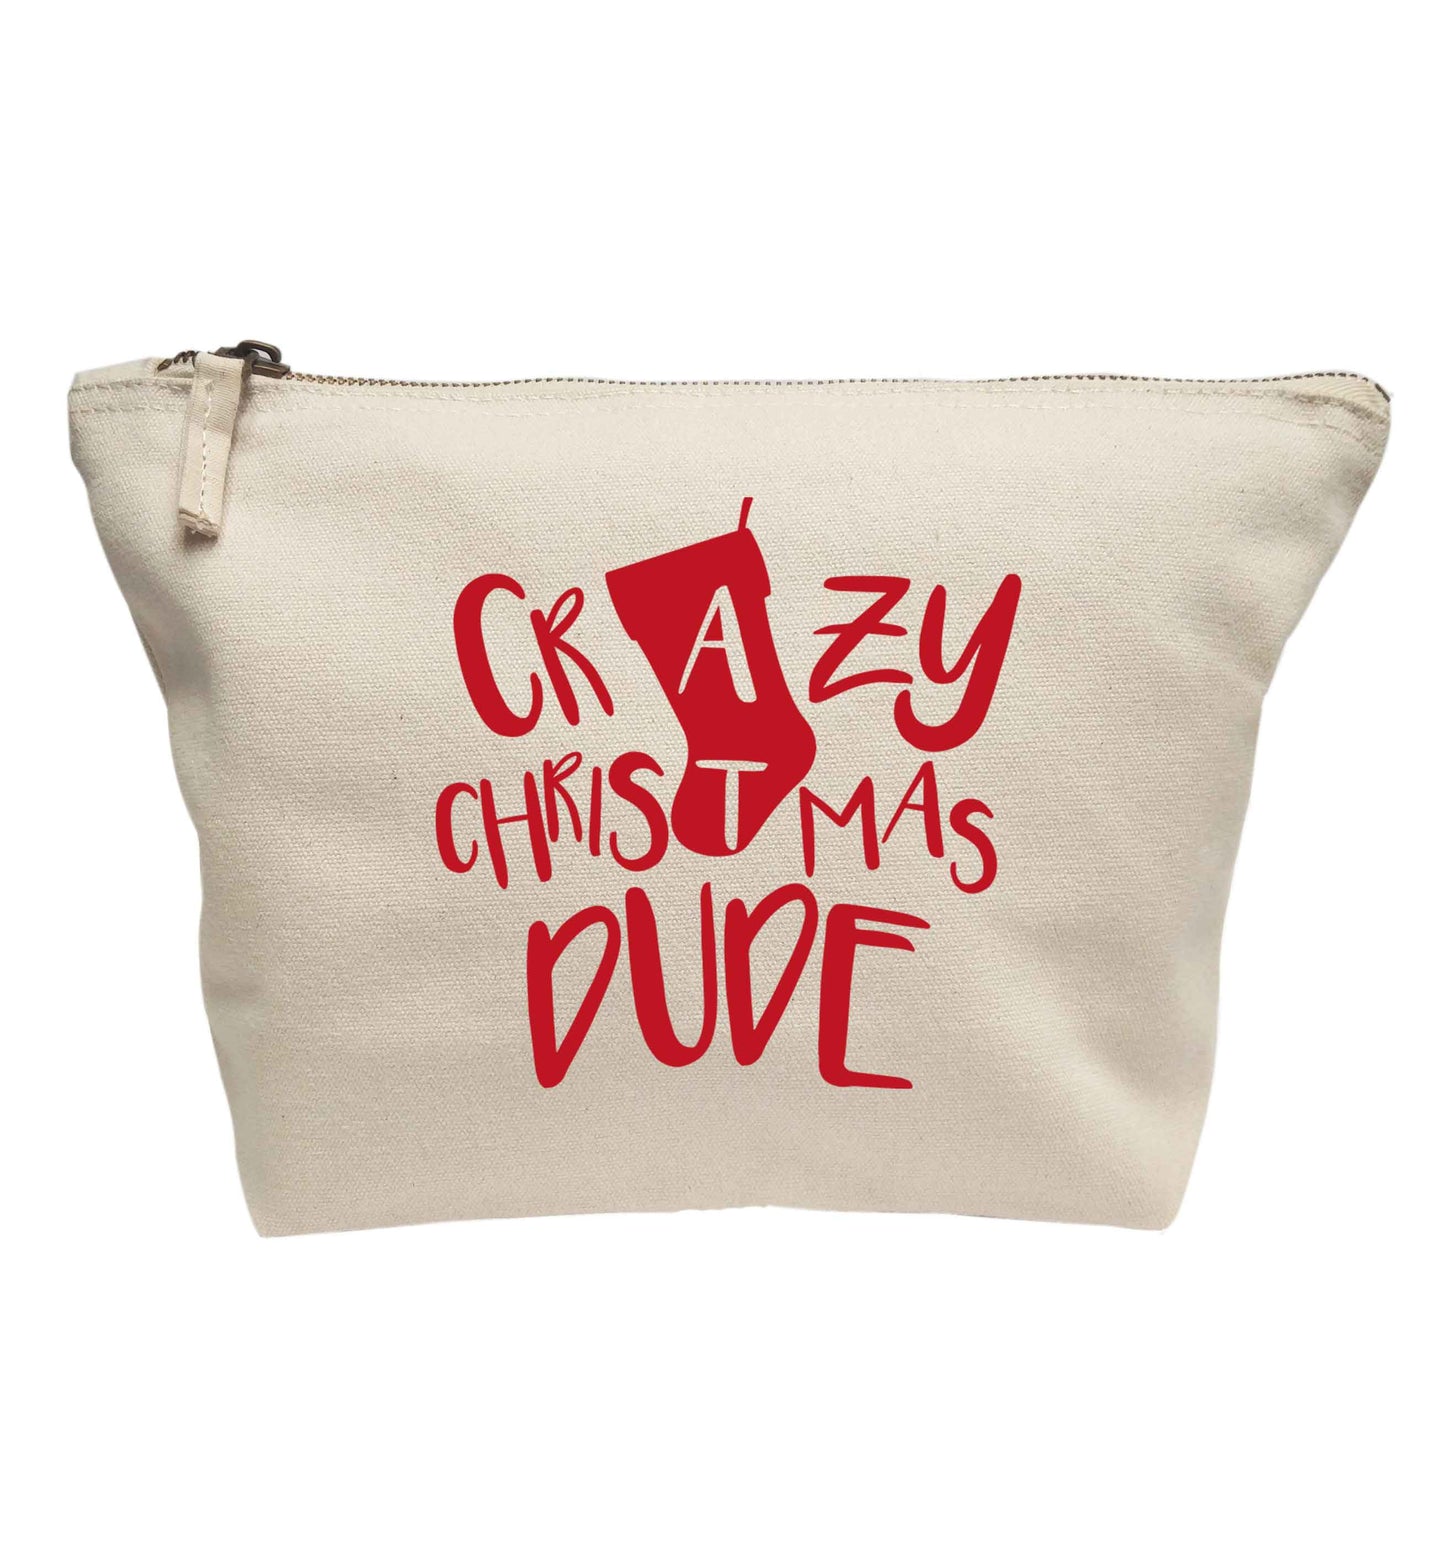 Crazy Christmas dude | Makeup / wash bag